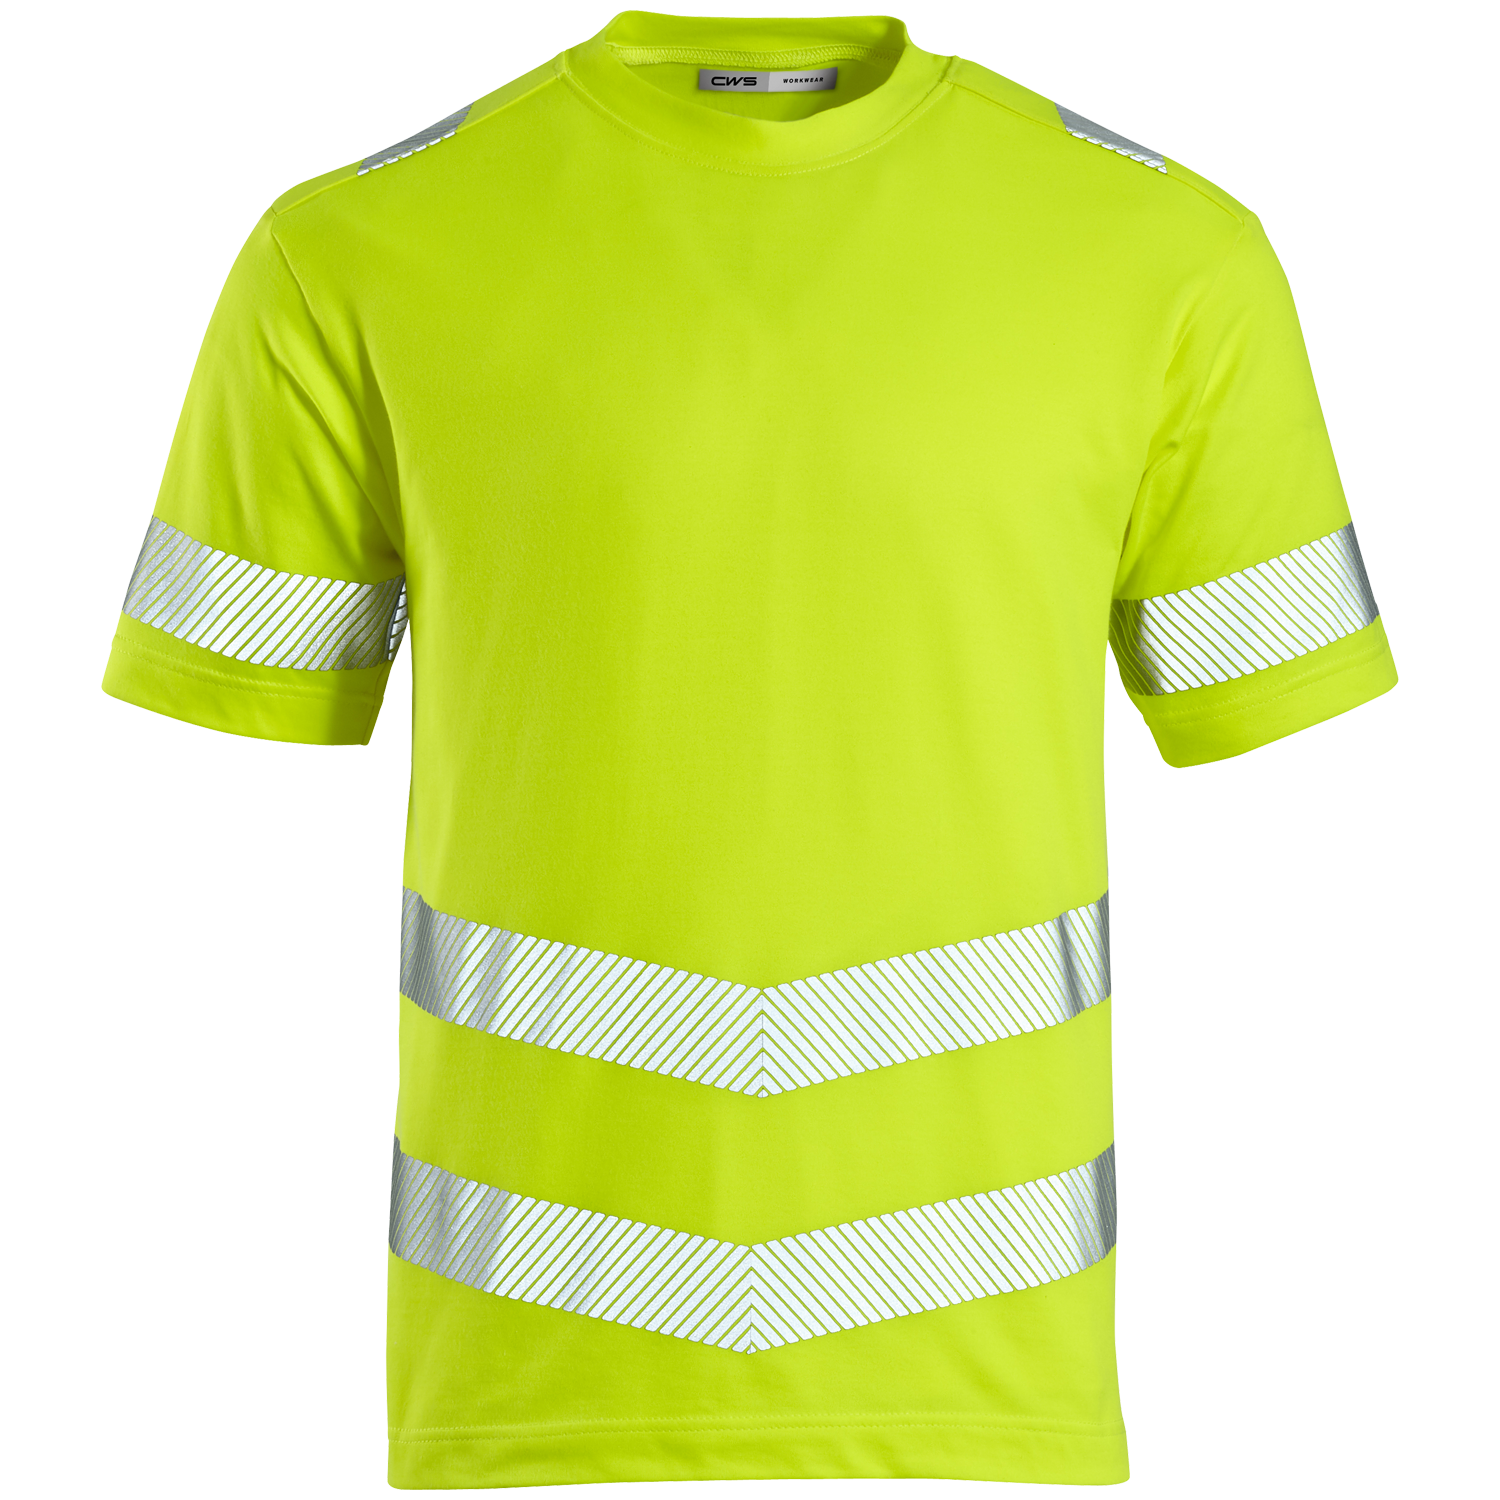 CWS Core HighVis T-Shirt HighVis Yellow w/ Reflective Stripes short sleeves